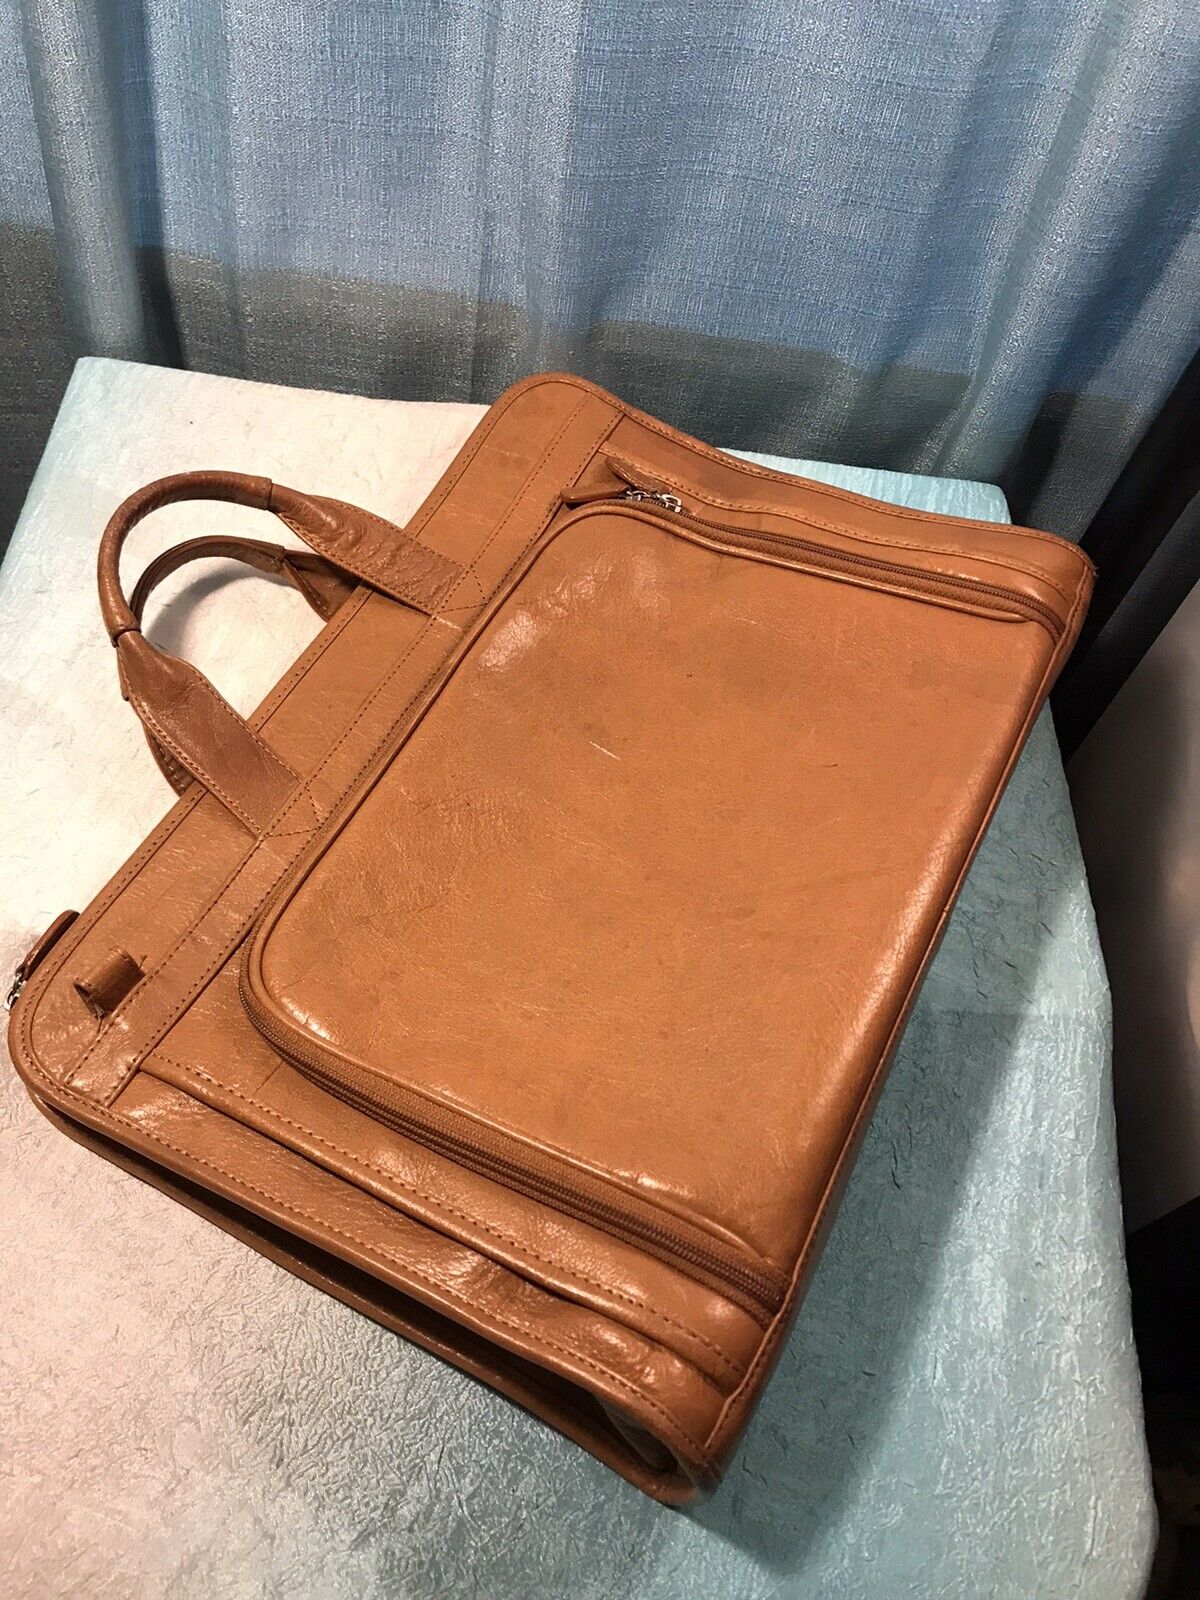 Wilsons Leather Pelle Studio Bag Briefcase Luxury Caramel Brown Computer Laptop